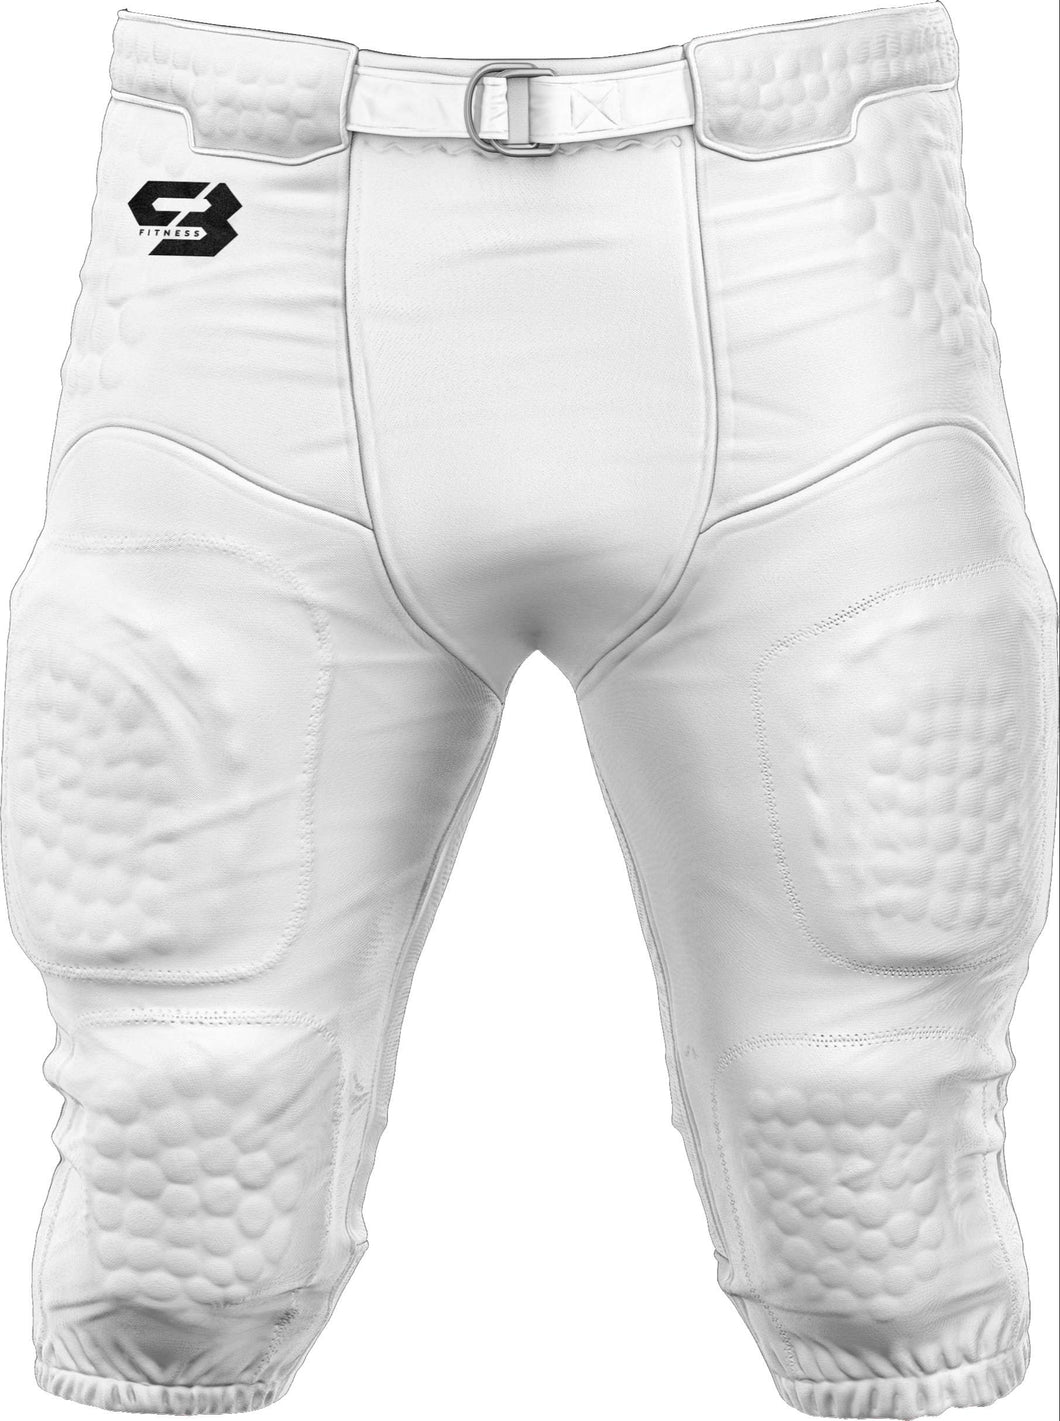 Football Pants - Custom Design